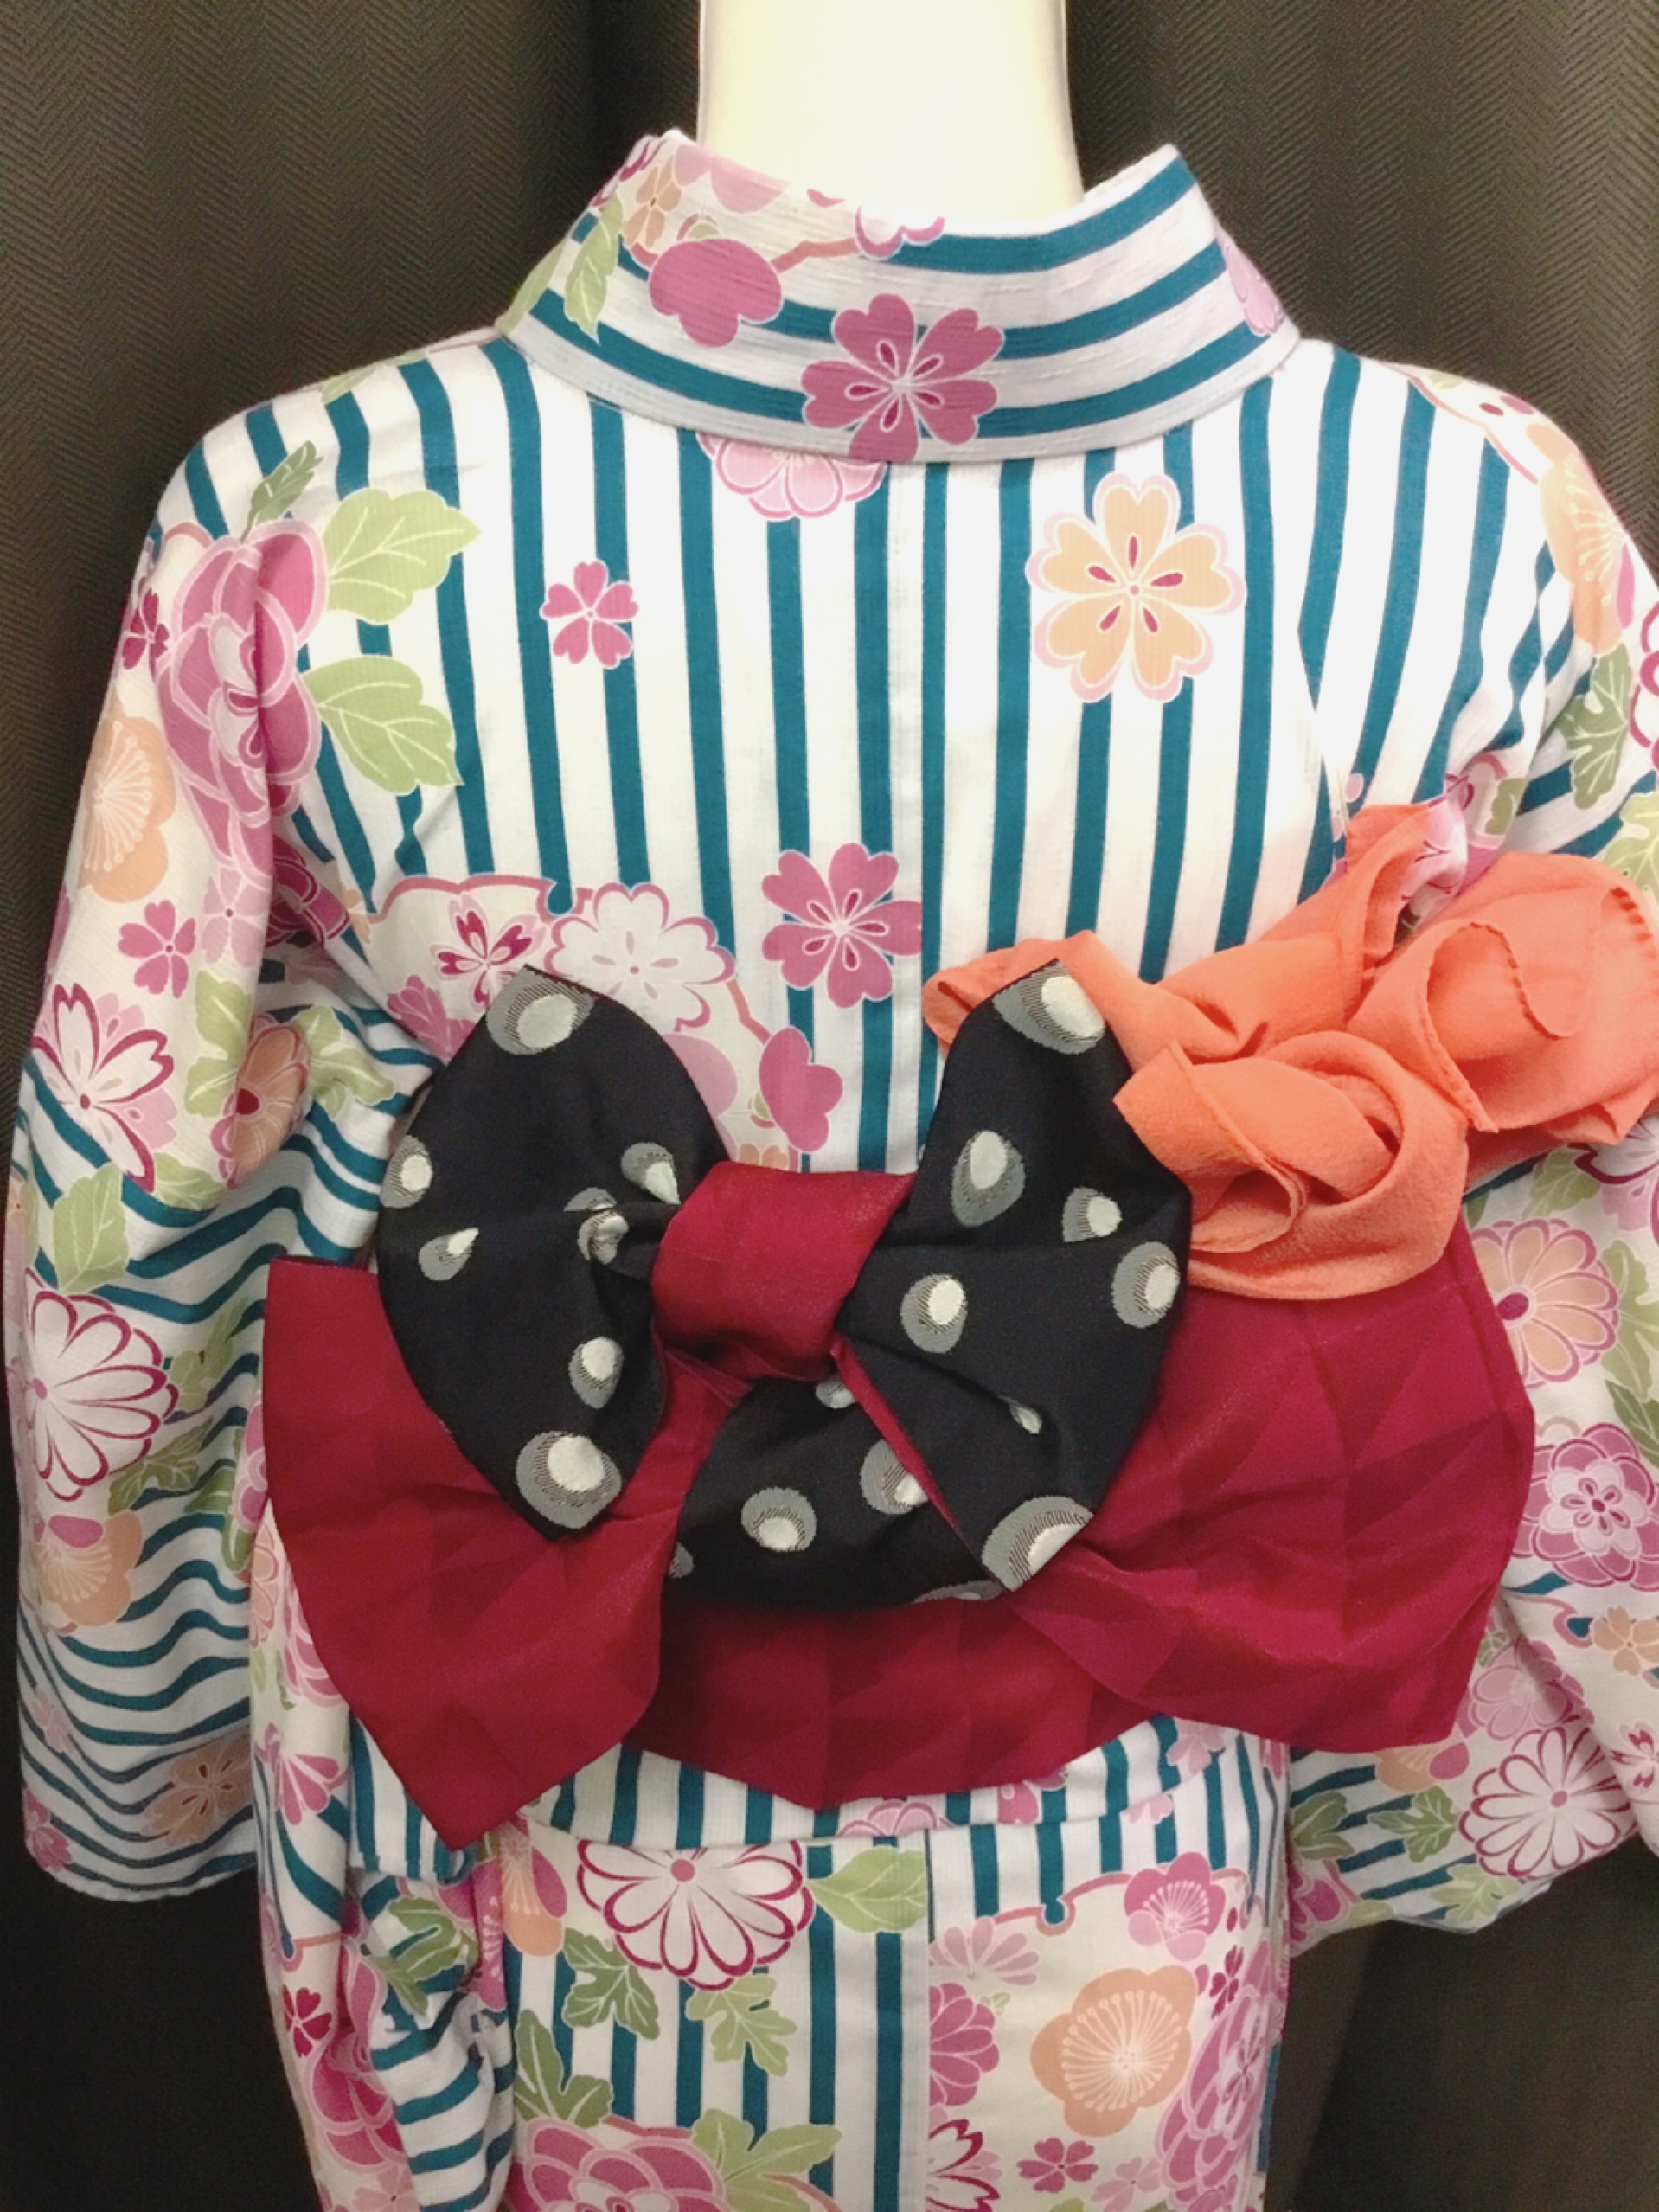 Shop Topics 可愛い帯結び 新宿で着物 浴衣を楽しむなら 着物レンタルvasara